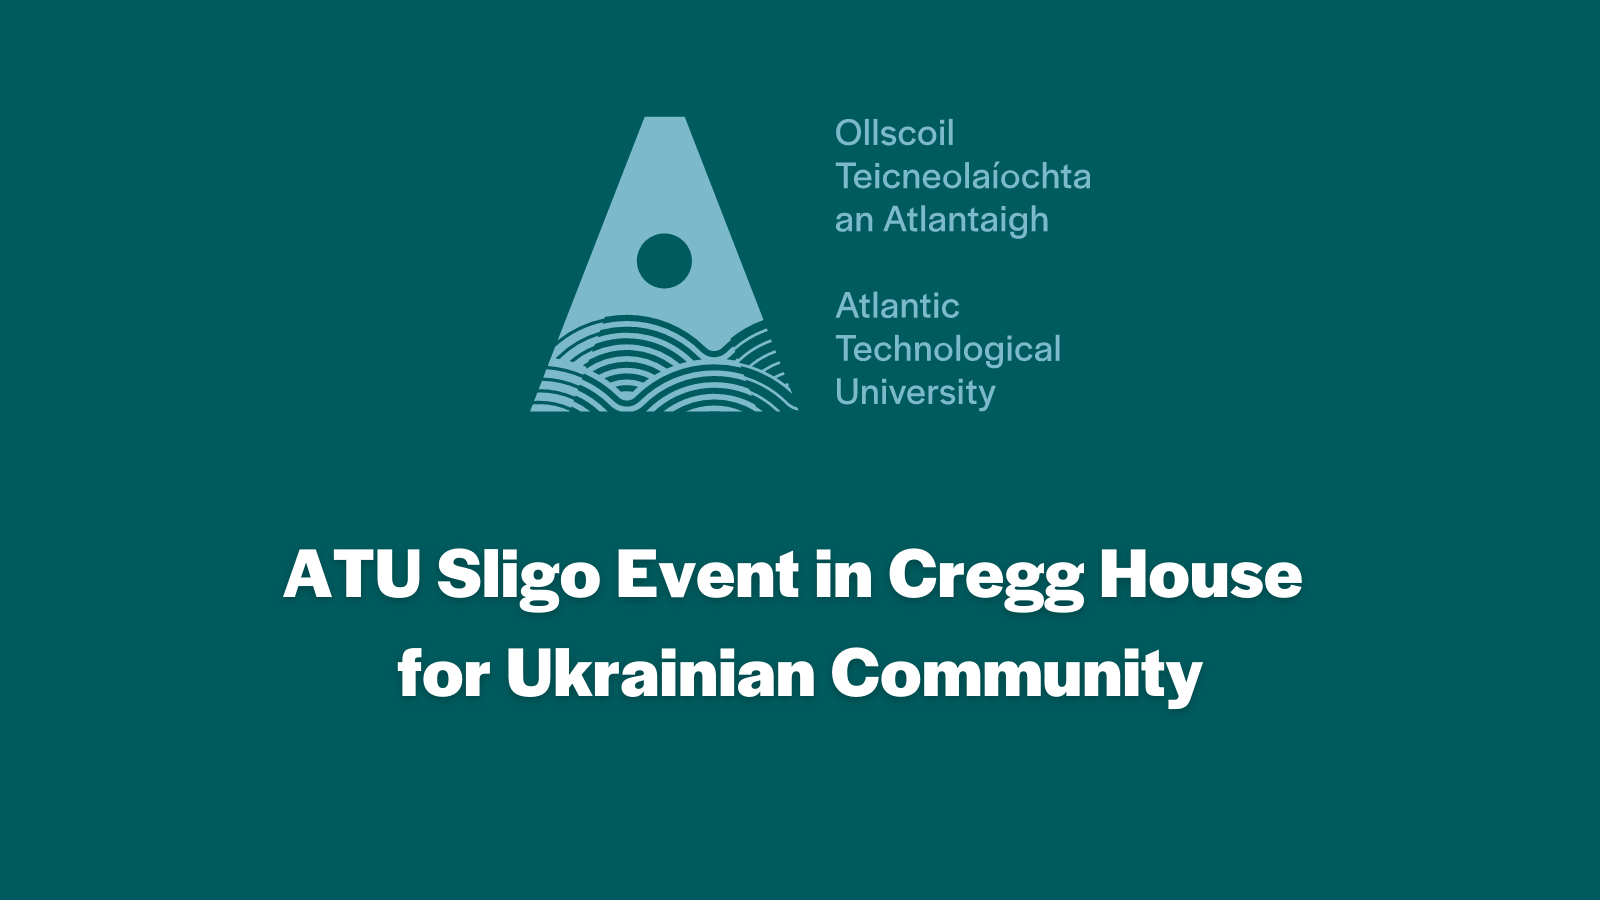 ATU Event in Cregg House for Ukrainian Community